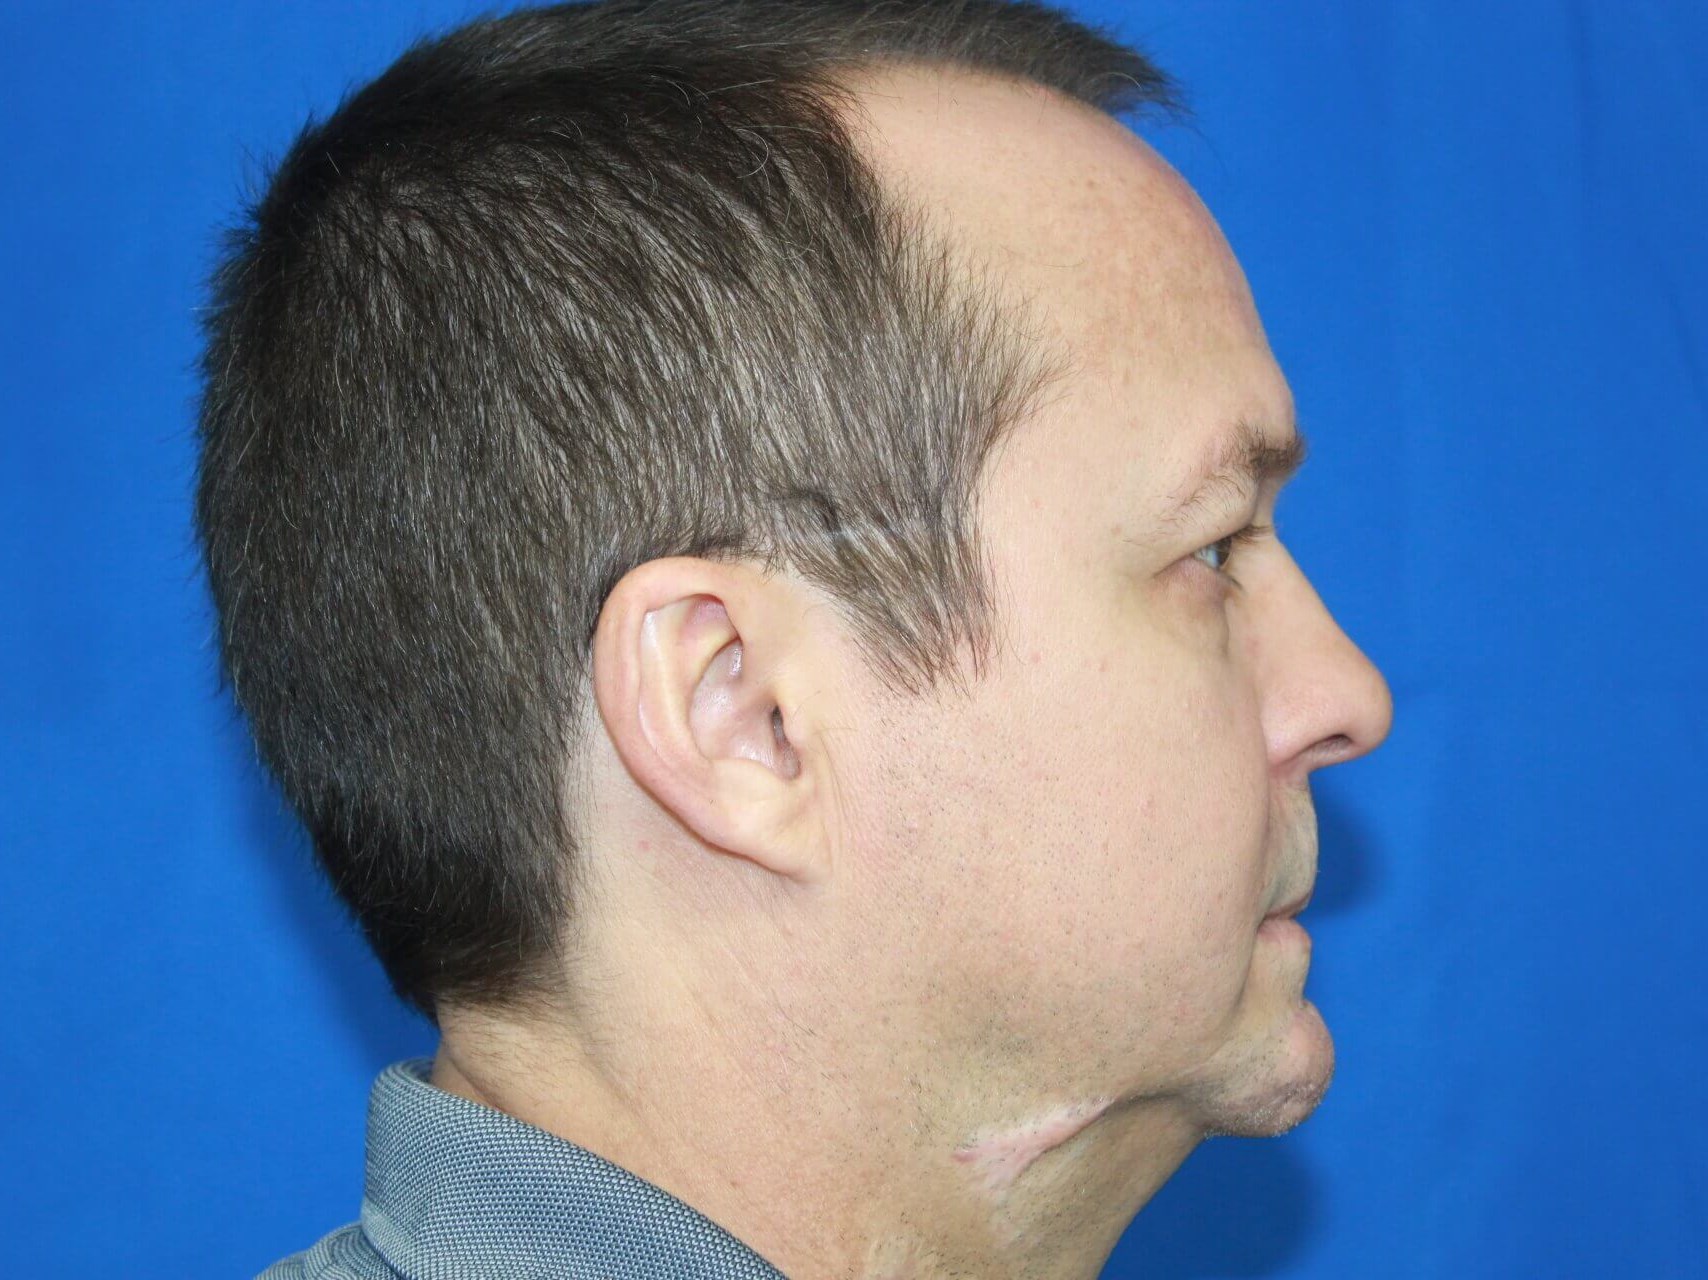 Scar Reduction real patient case photo